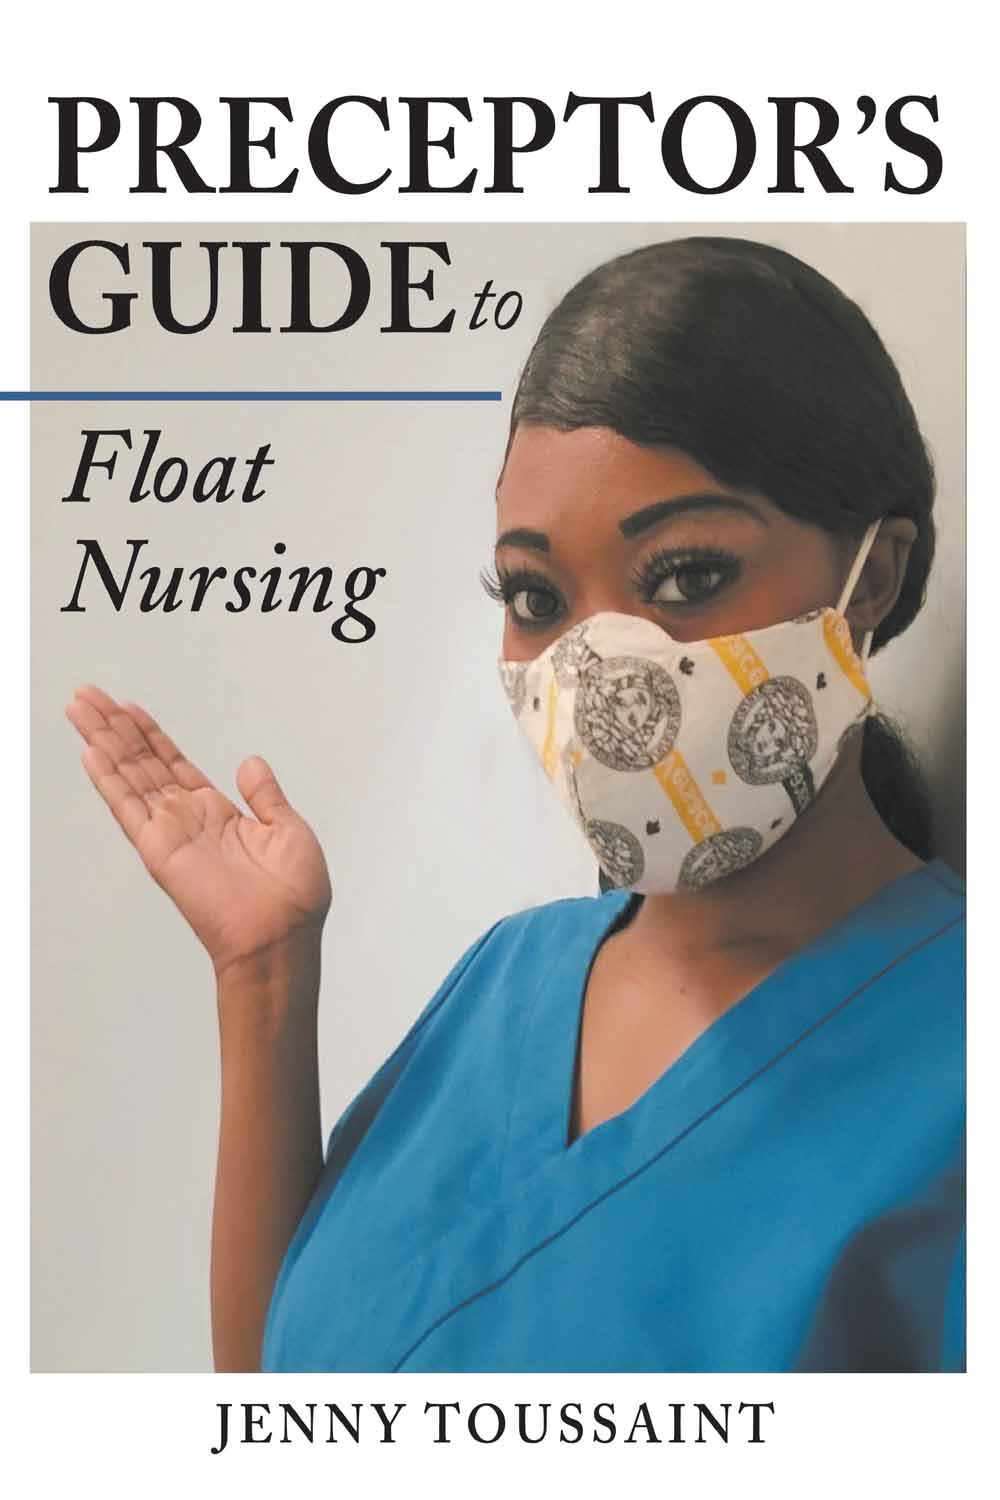 Preceptor's Guide to Float Nursing by Jenny Toussaint